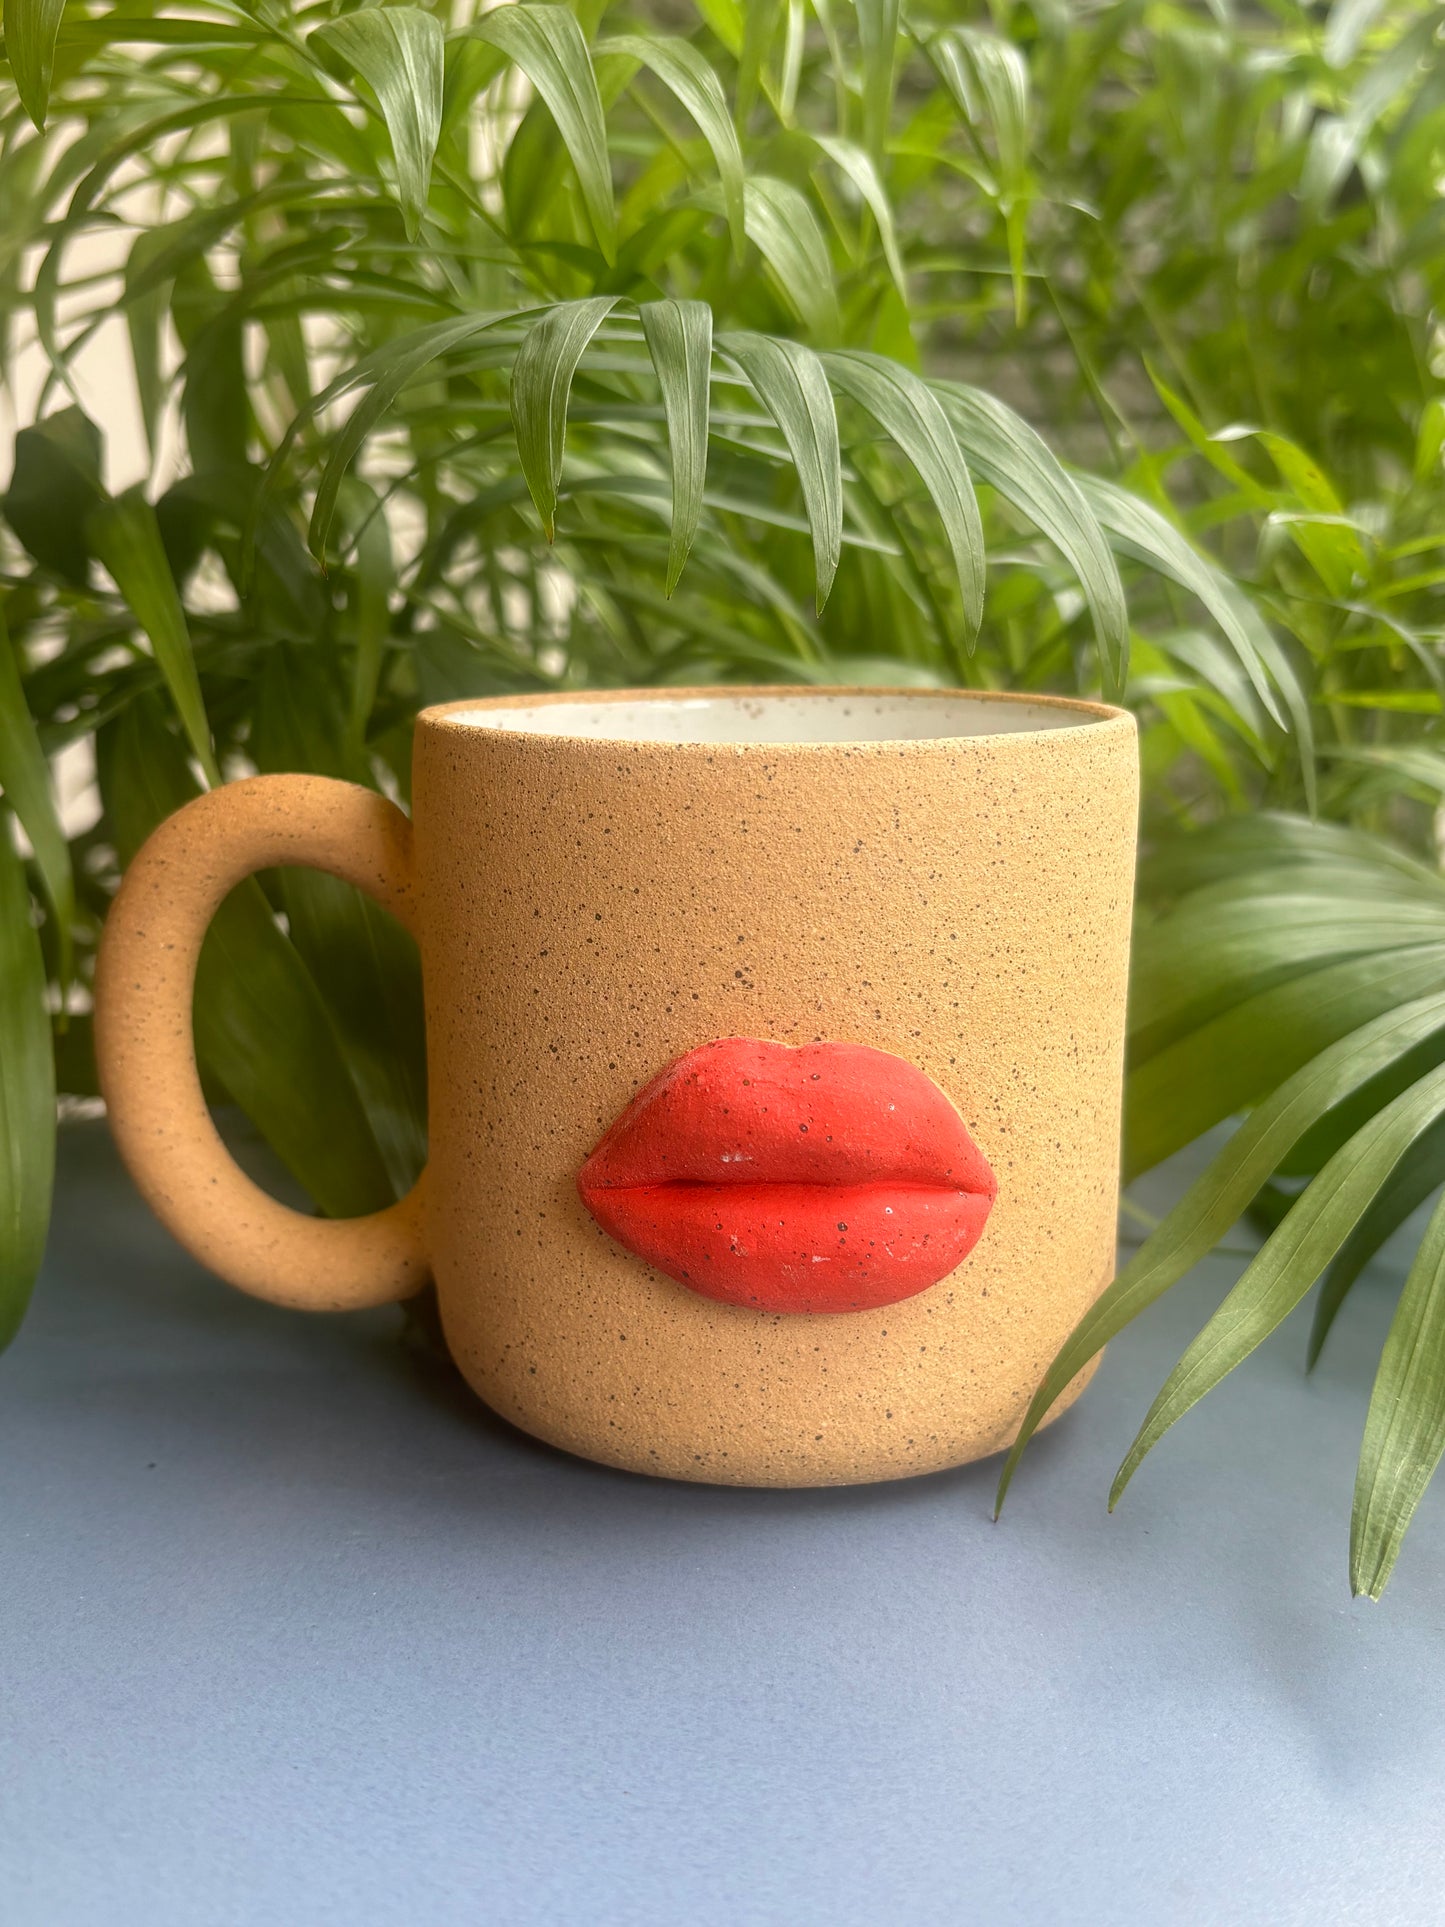 Lips Mug